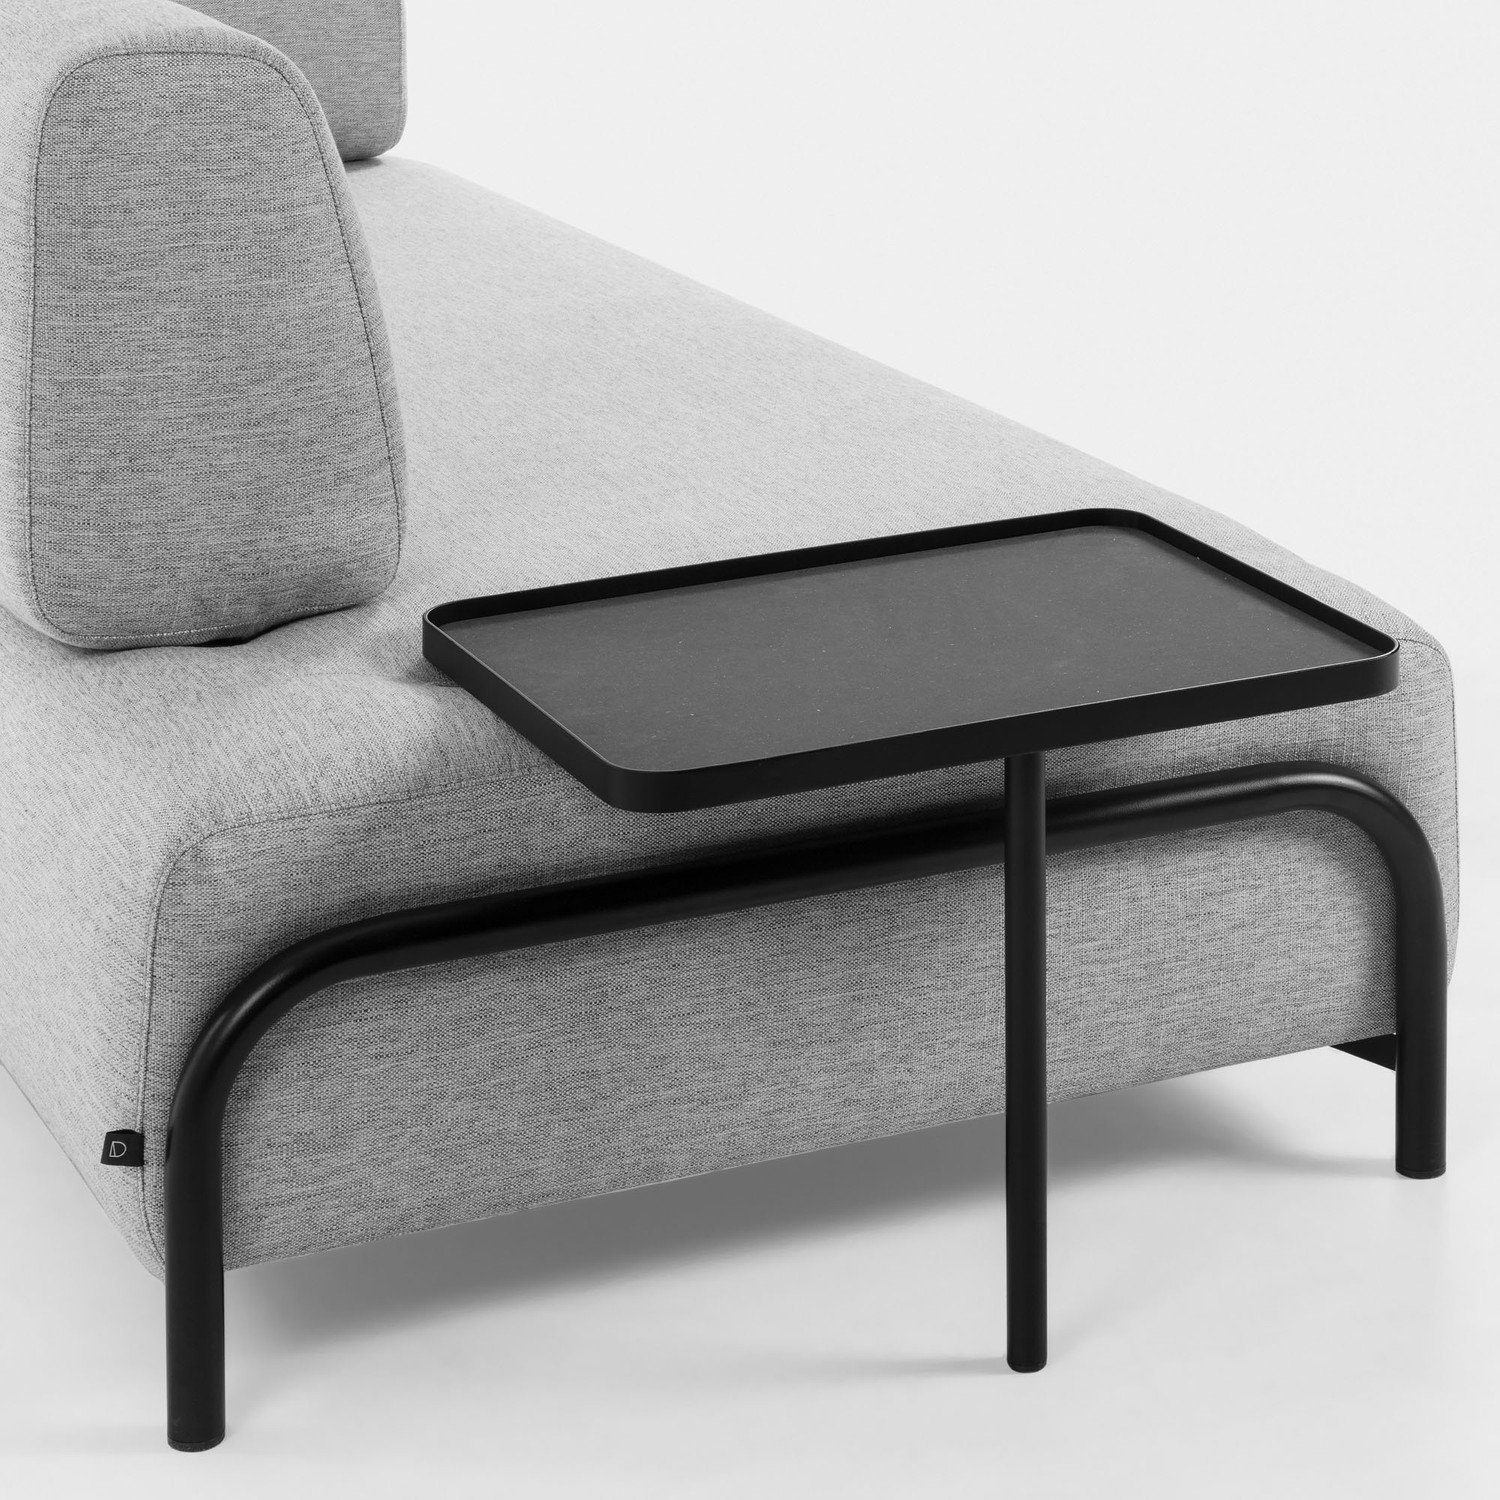 hellgrau Natur24 252cm mit Couch Compo Sofa Tablett großem Sofa 3-Sitzer